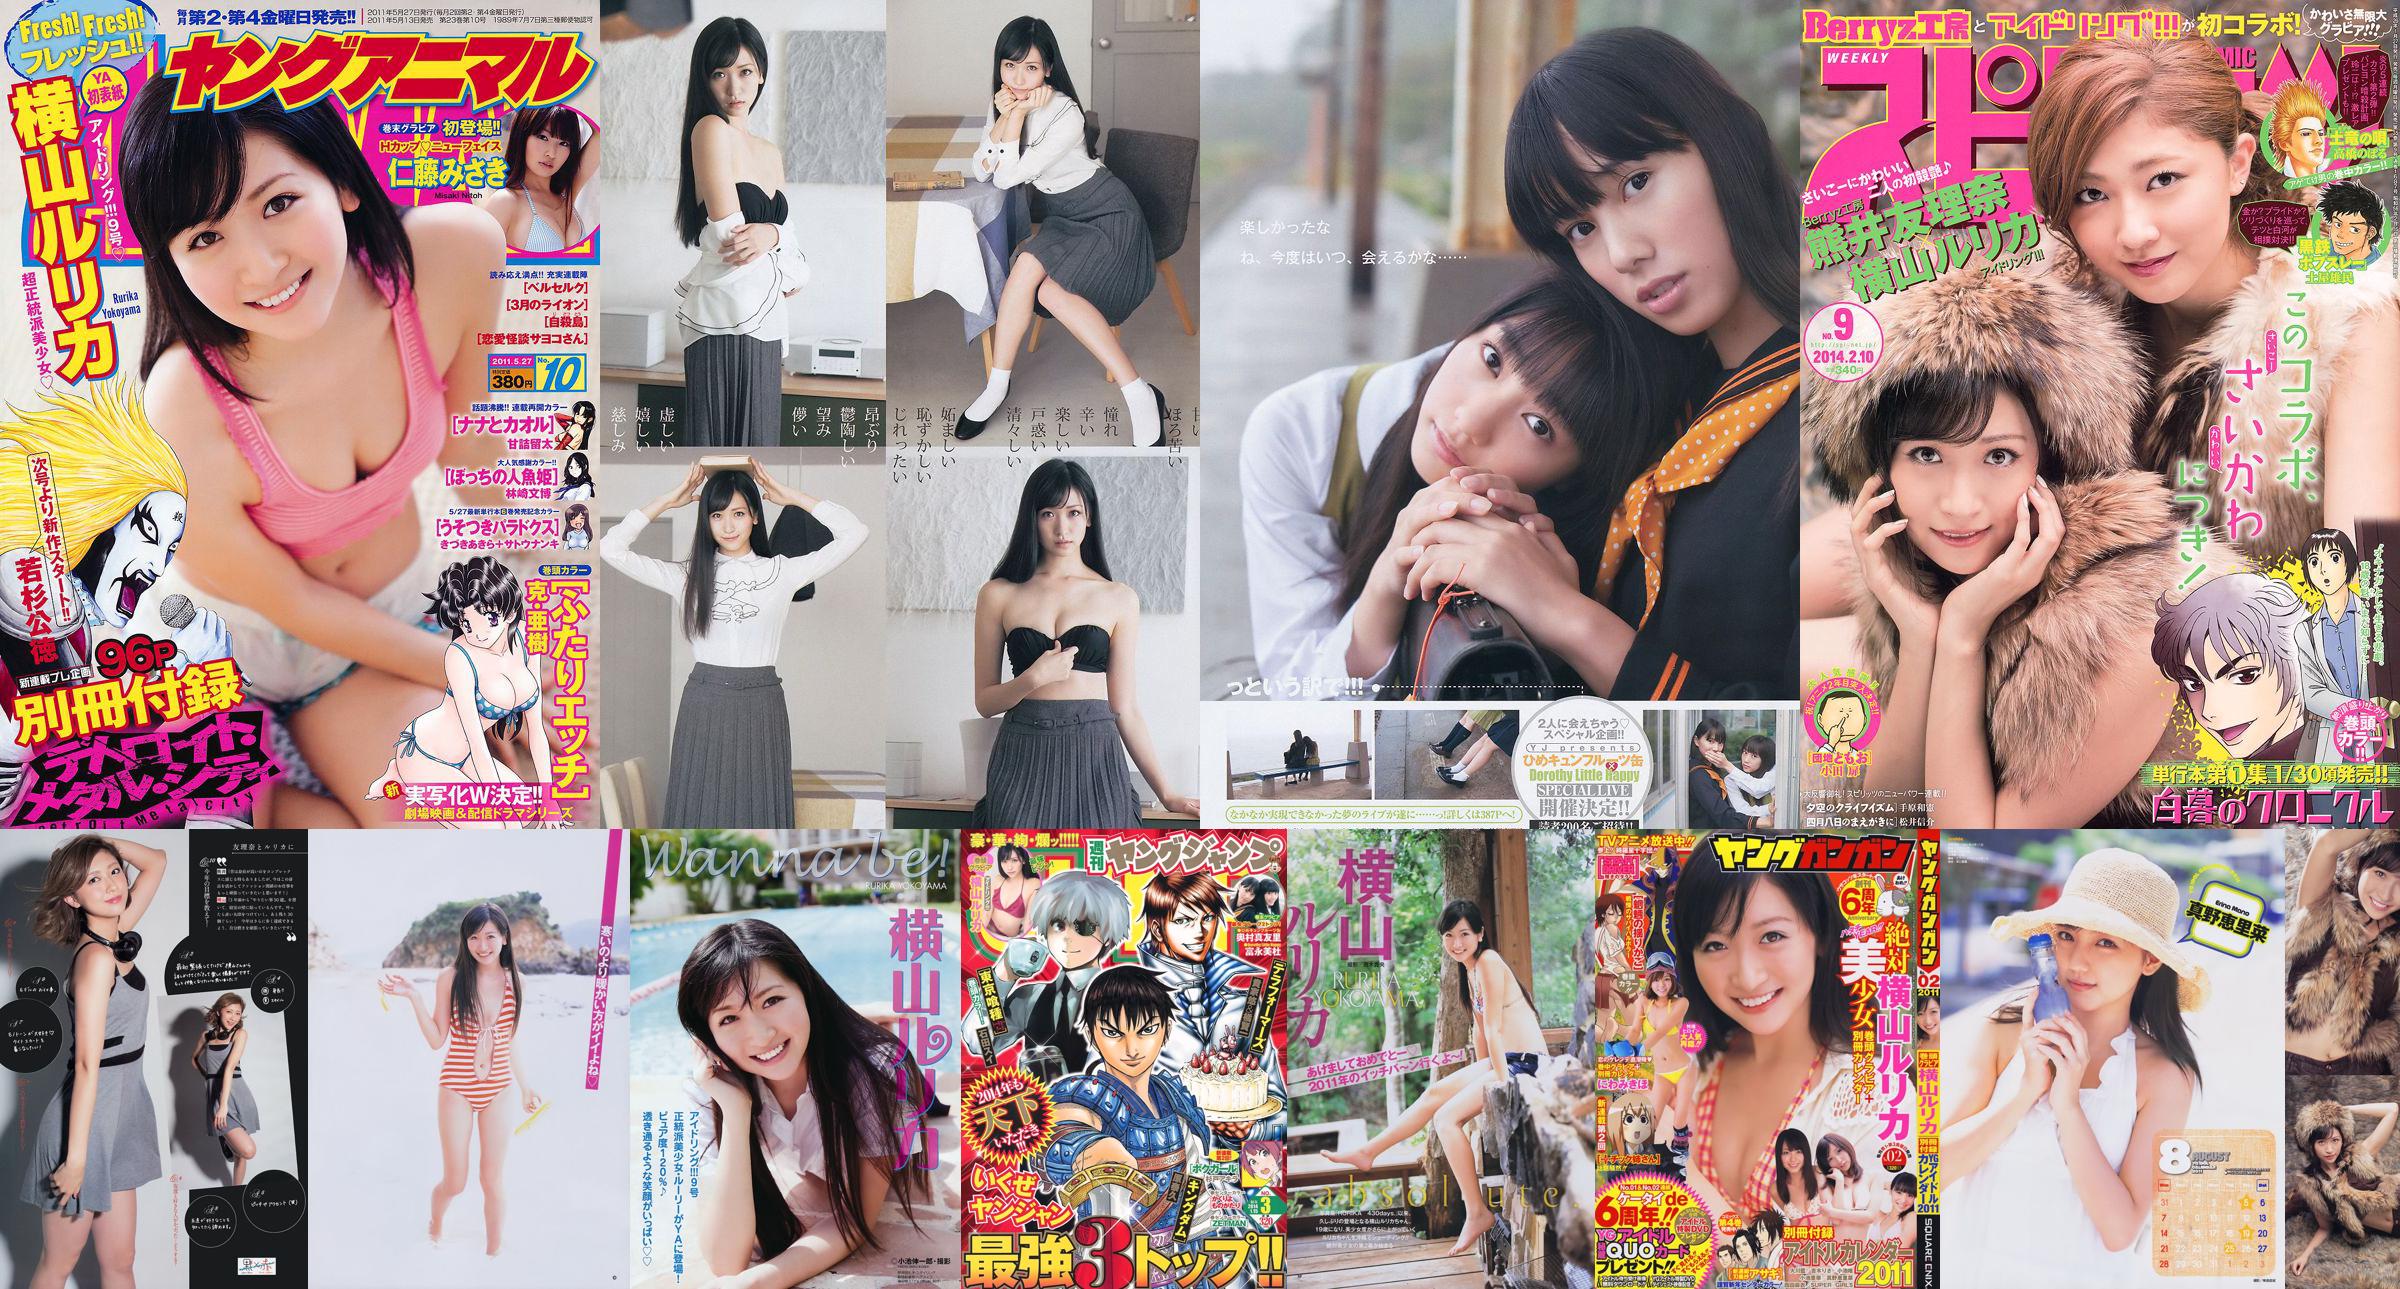 [Young Gangan] Rurika Yokoyama 2011 No.02 Photo Magazine No.7d920d Page 1